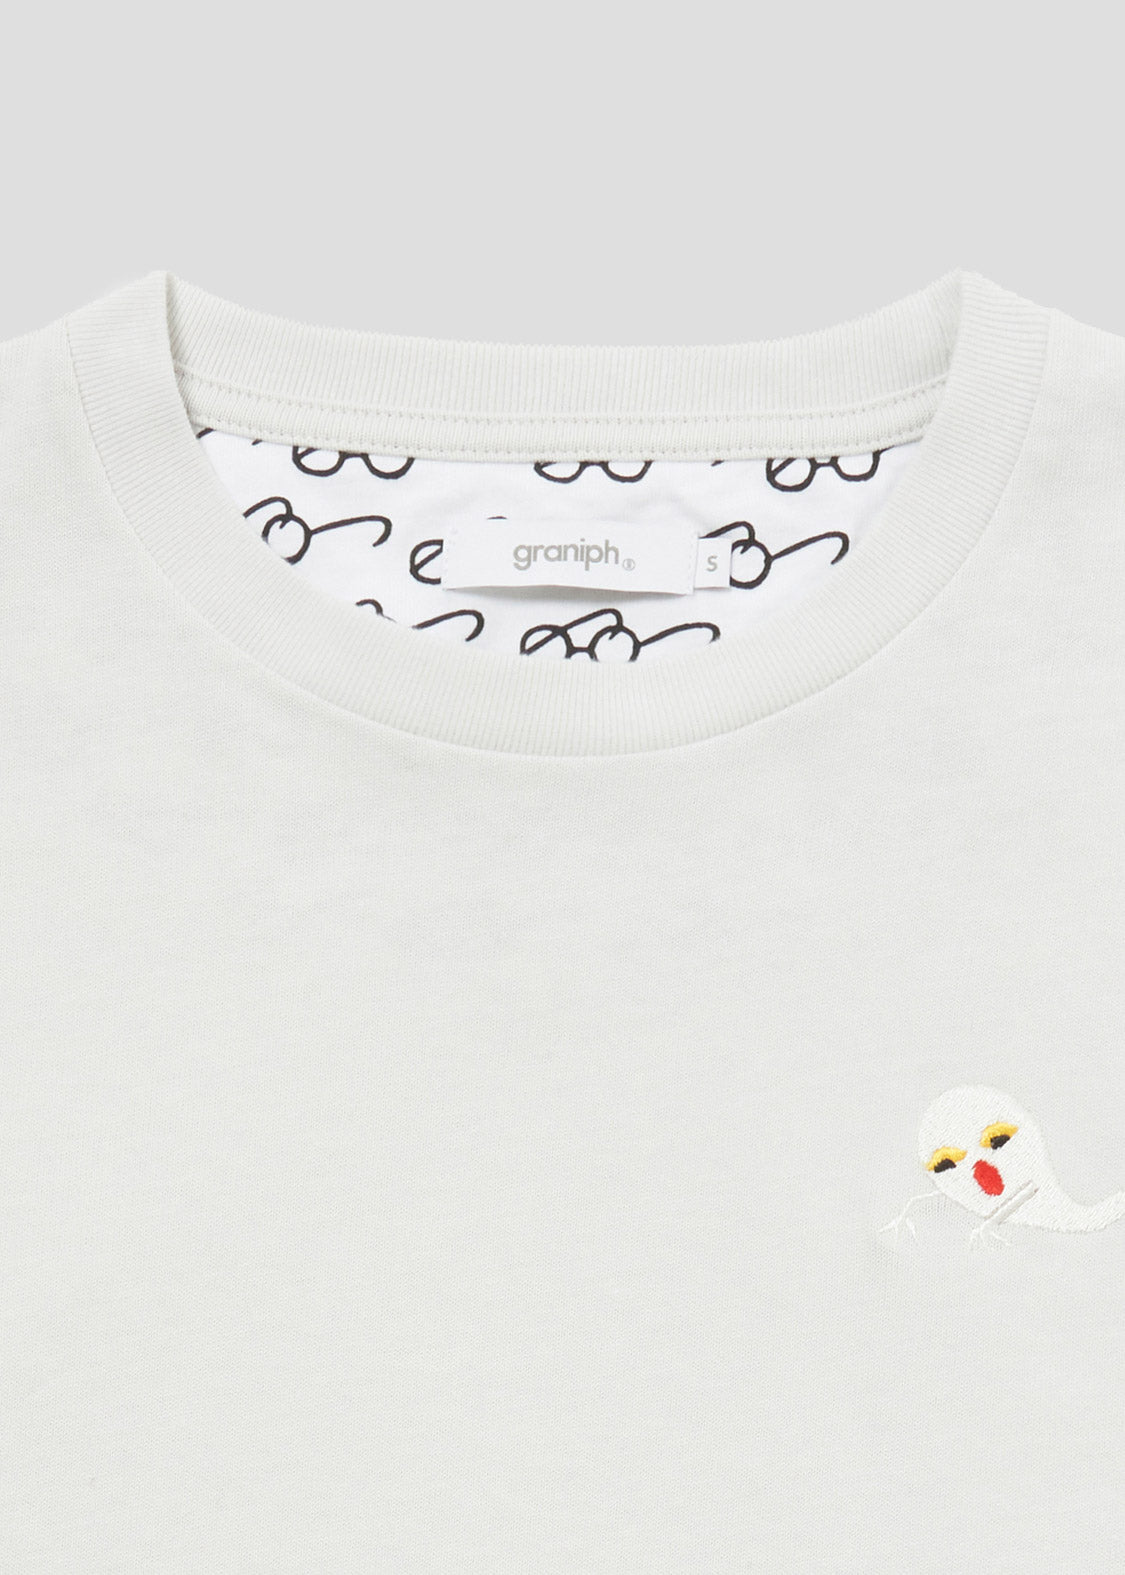 Keiko Sena Big Silhouette Half Sleeve Tee (Keiko Sena_Ghost Embroidery)